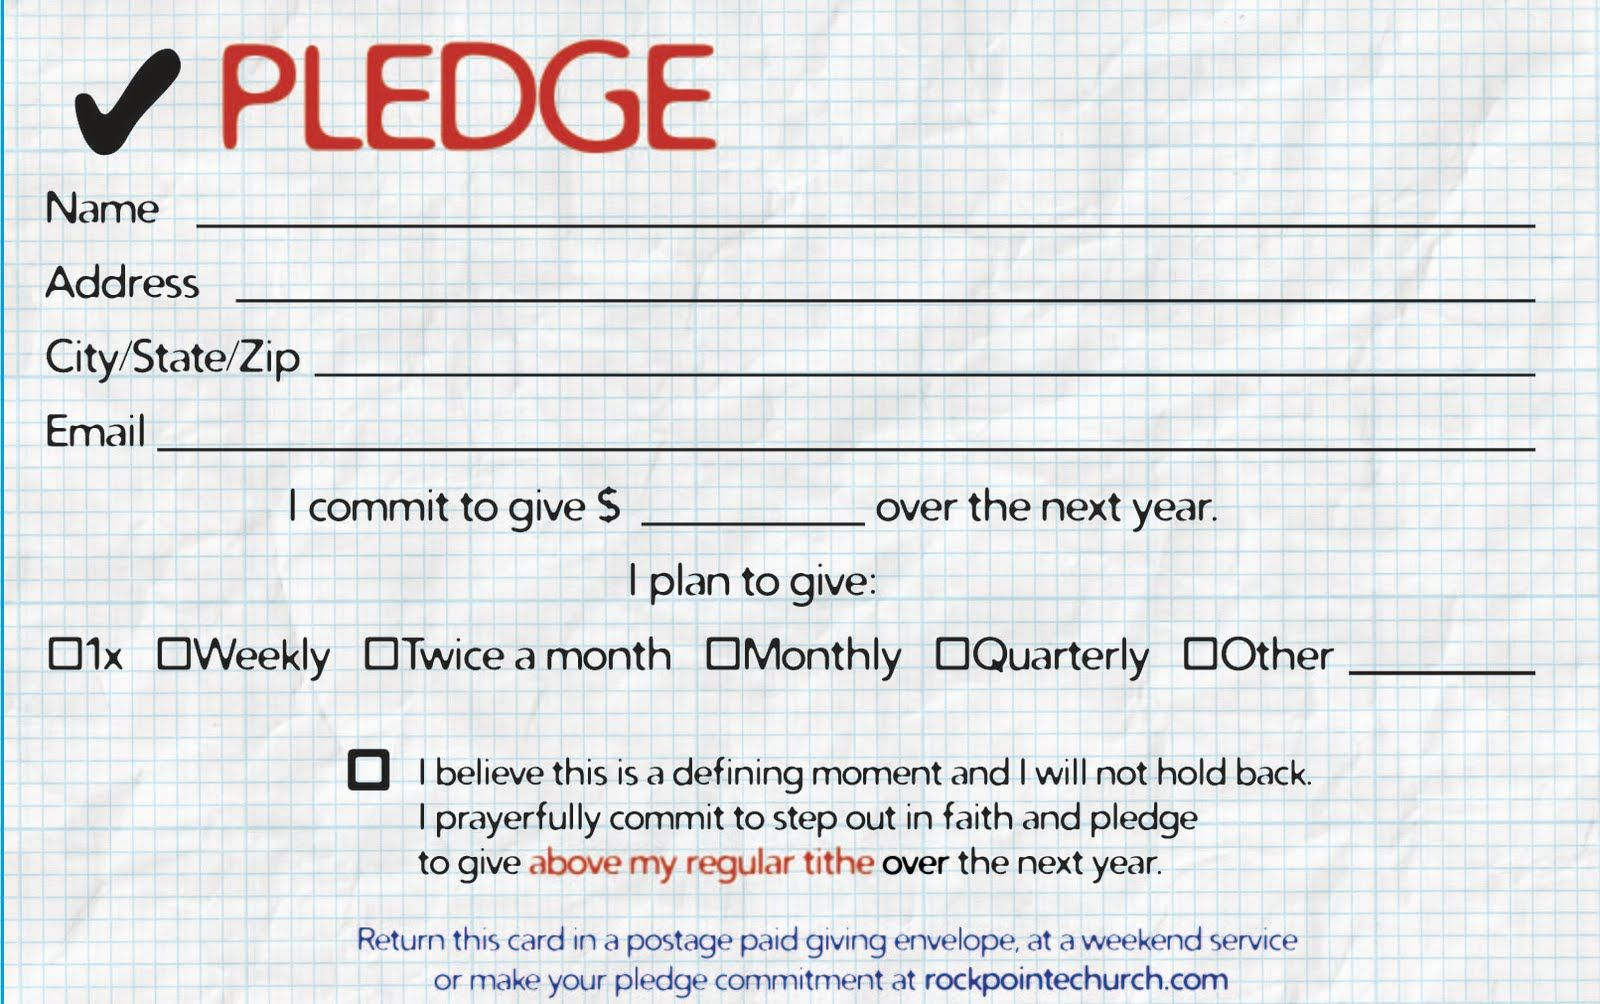 Pledge Cards For Churches | Pledge Card Templates | My Stuff Inside Free Pledge Card Template